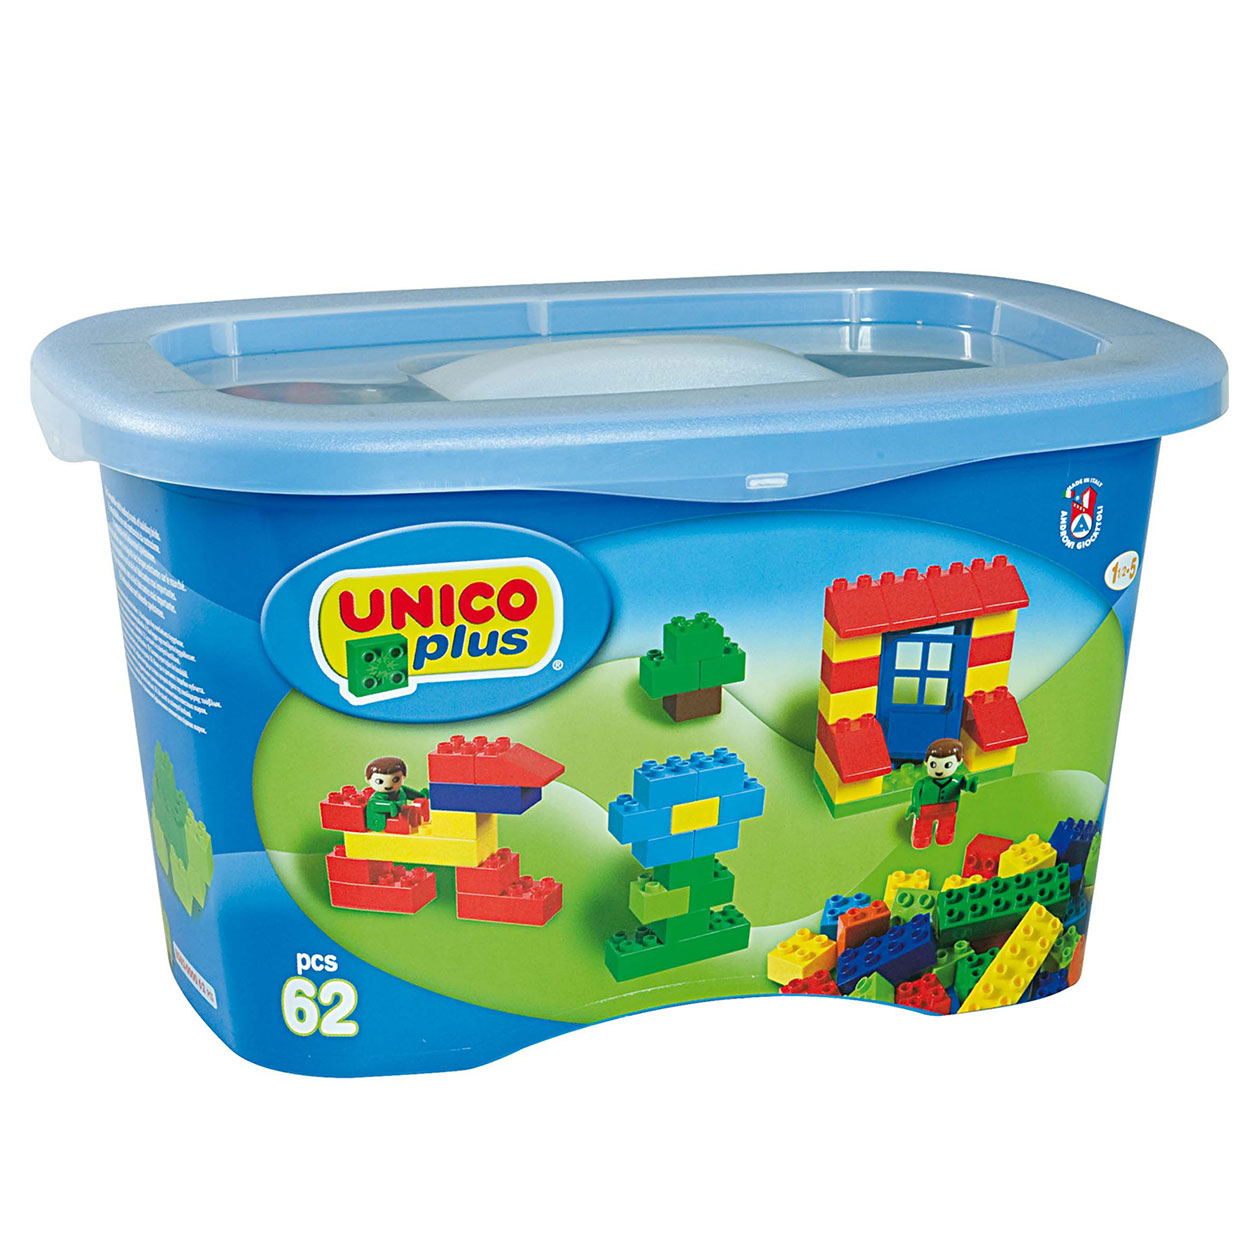 Unico Box, 62dlg